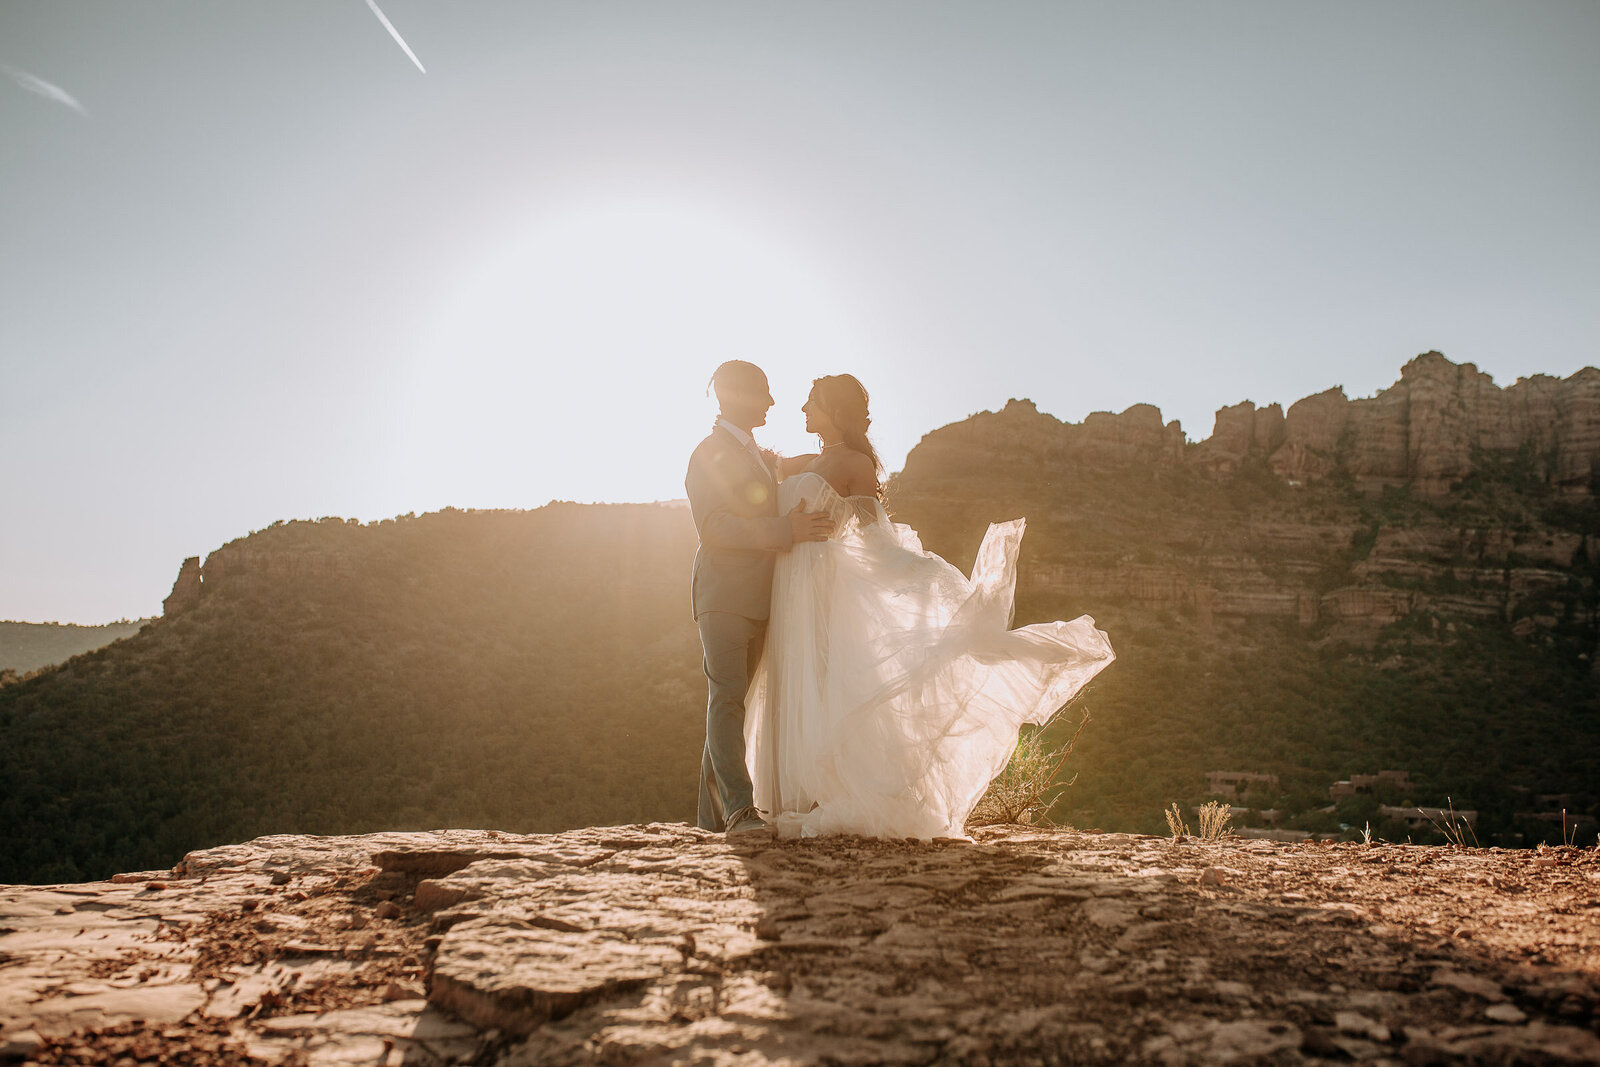 Romantic boho wedding dress in sedona red rocks for an adventurous arizona wedding